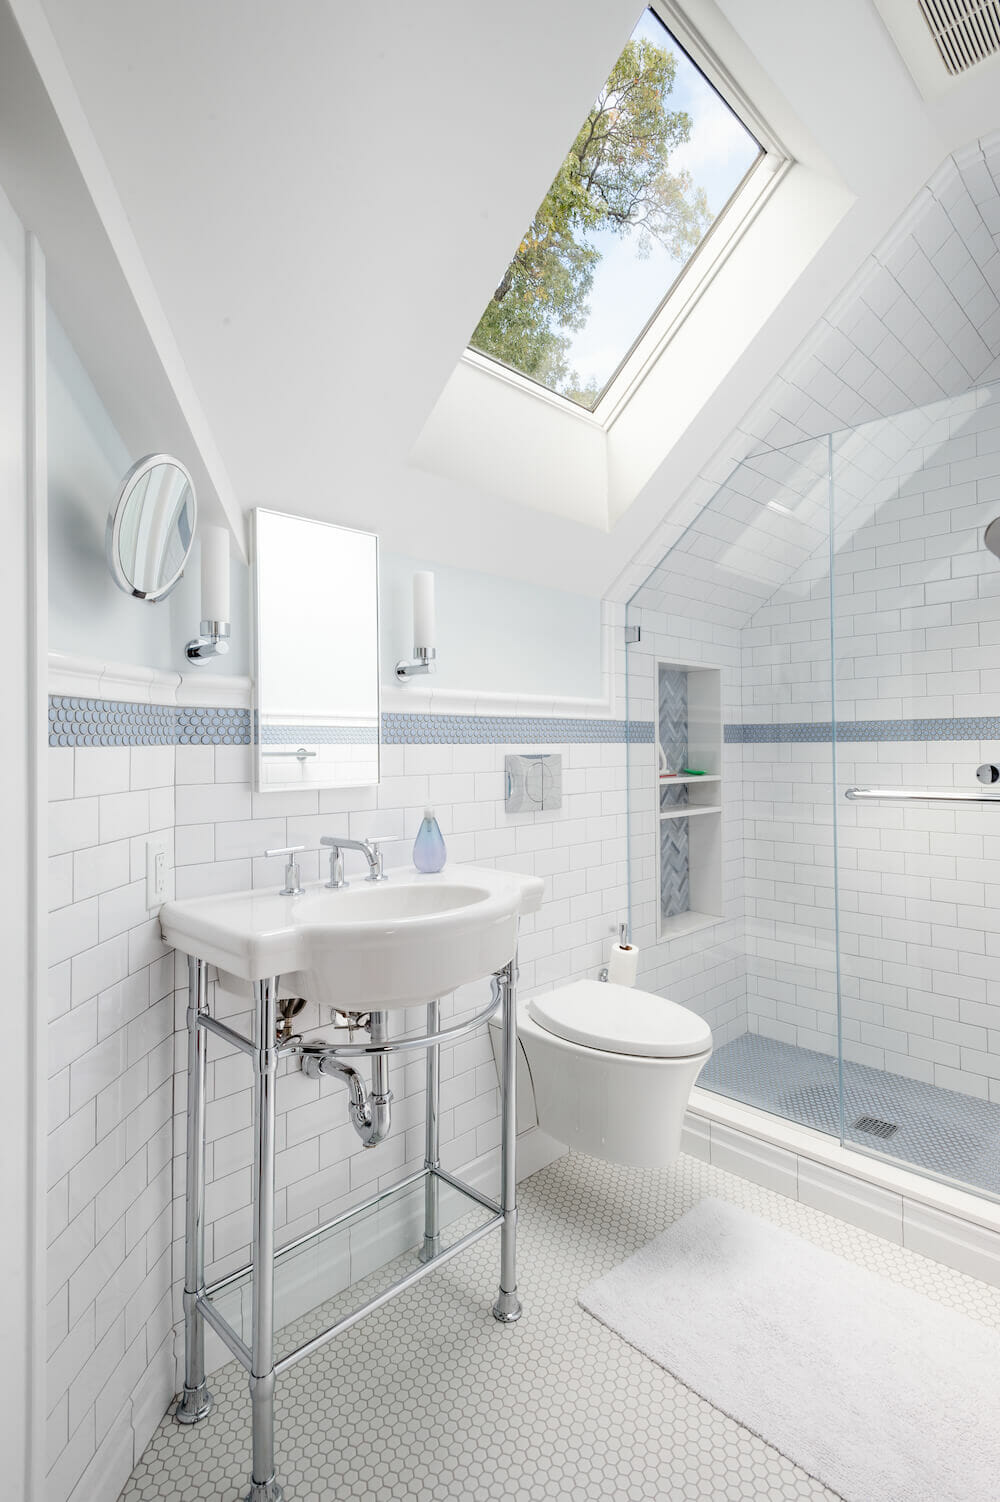 Top 5 Styles Of Bathroom Floor Tiles, White Penny Tile Bathroom Floor